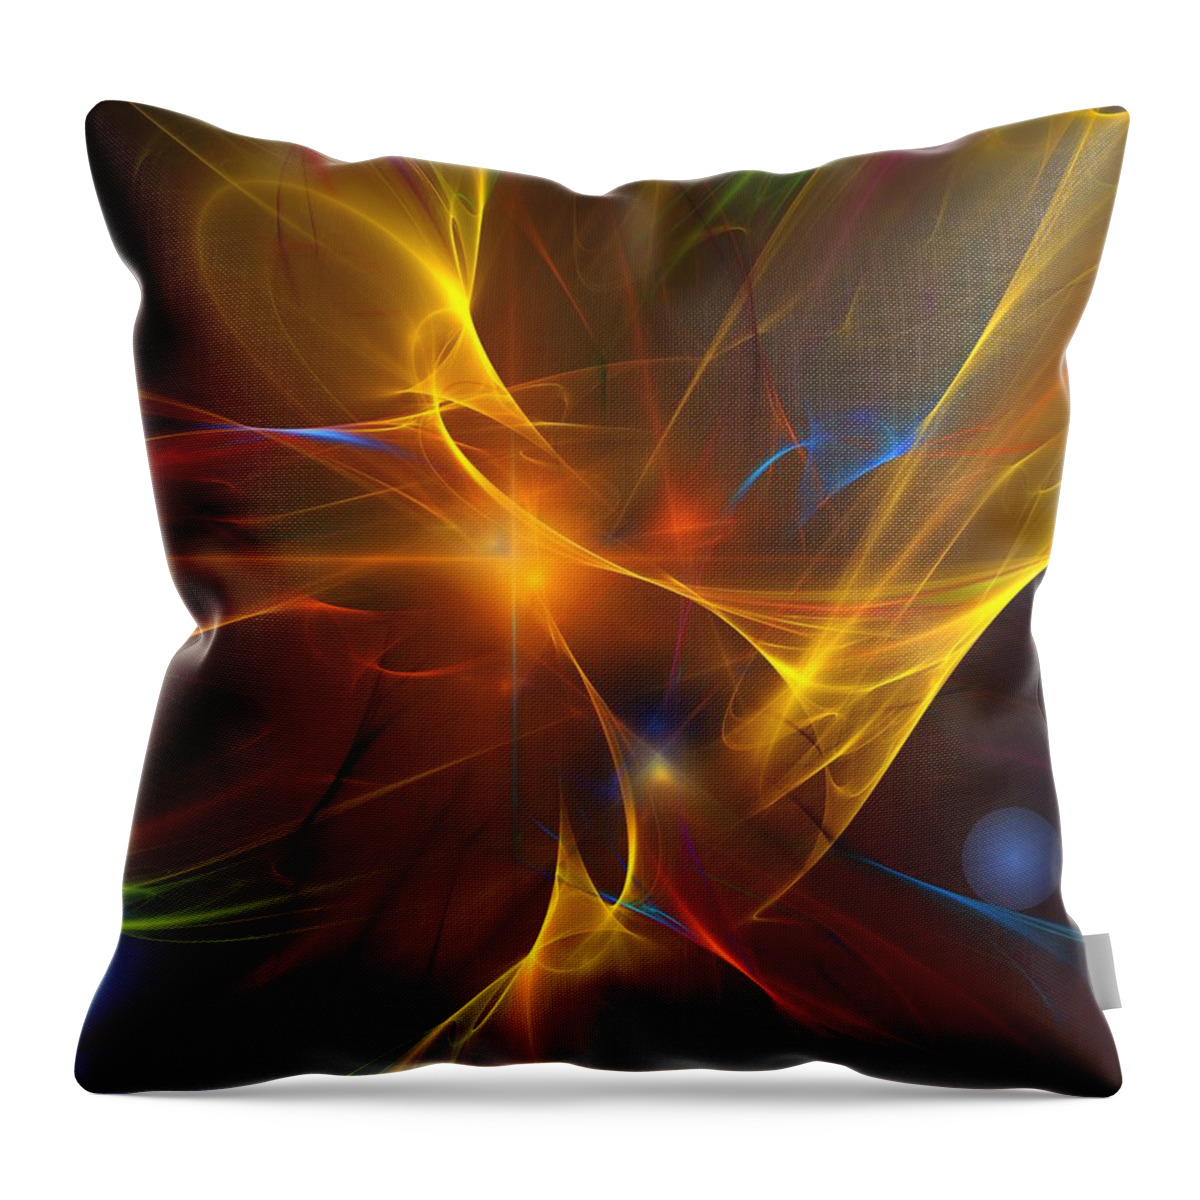 Fractal Throw Pillow featuring the digital art Energy Matrix by David Lane